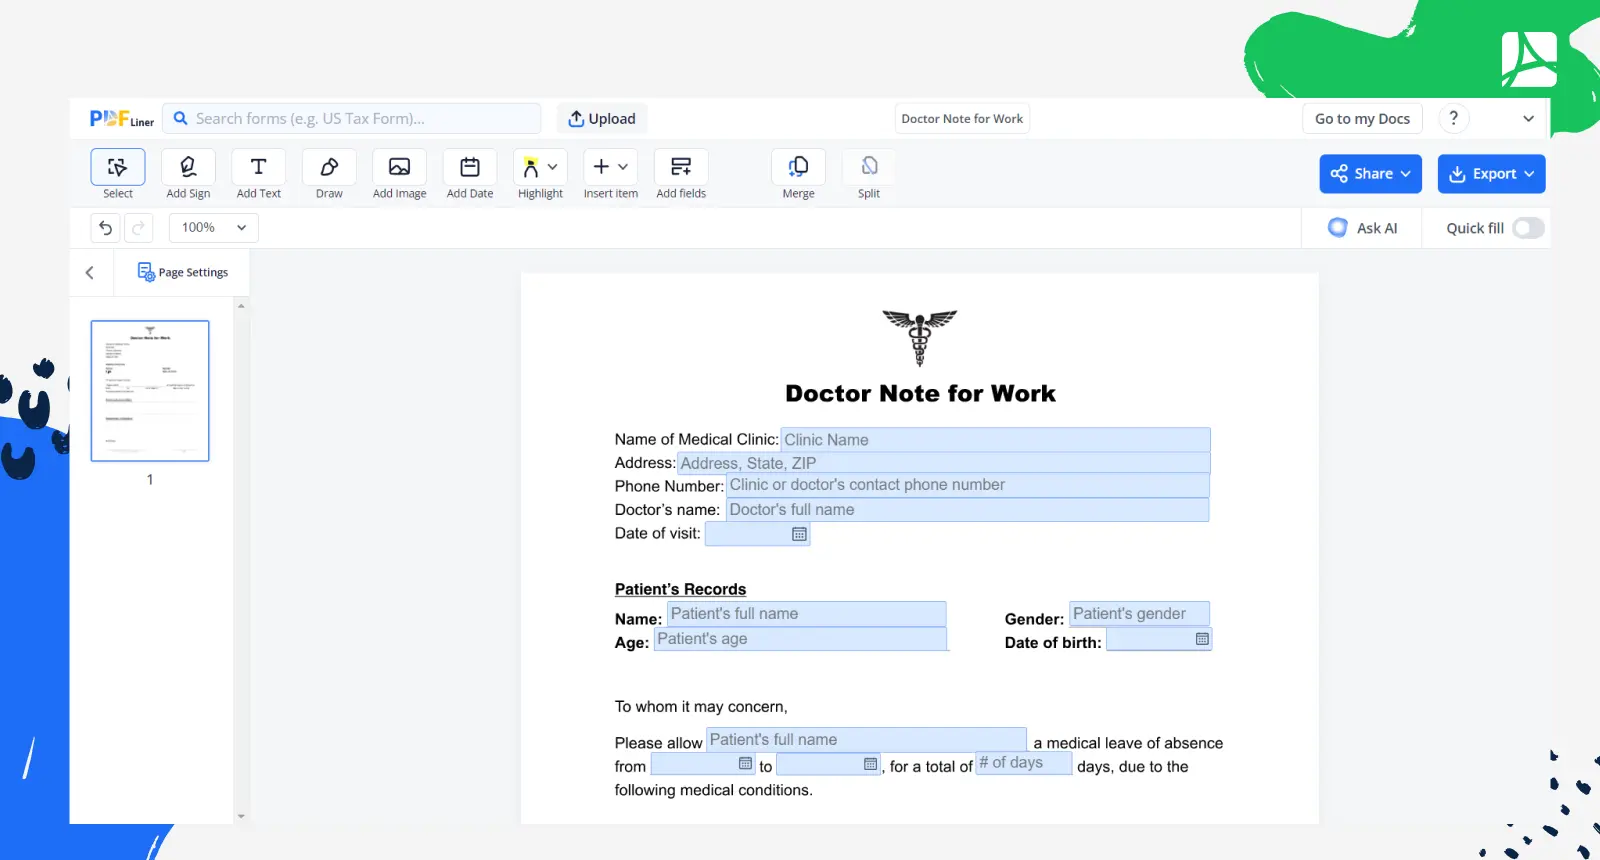 Doctor note for work screenshot 1 in PDFLiner editor